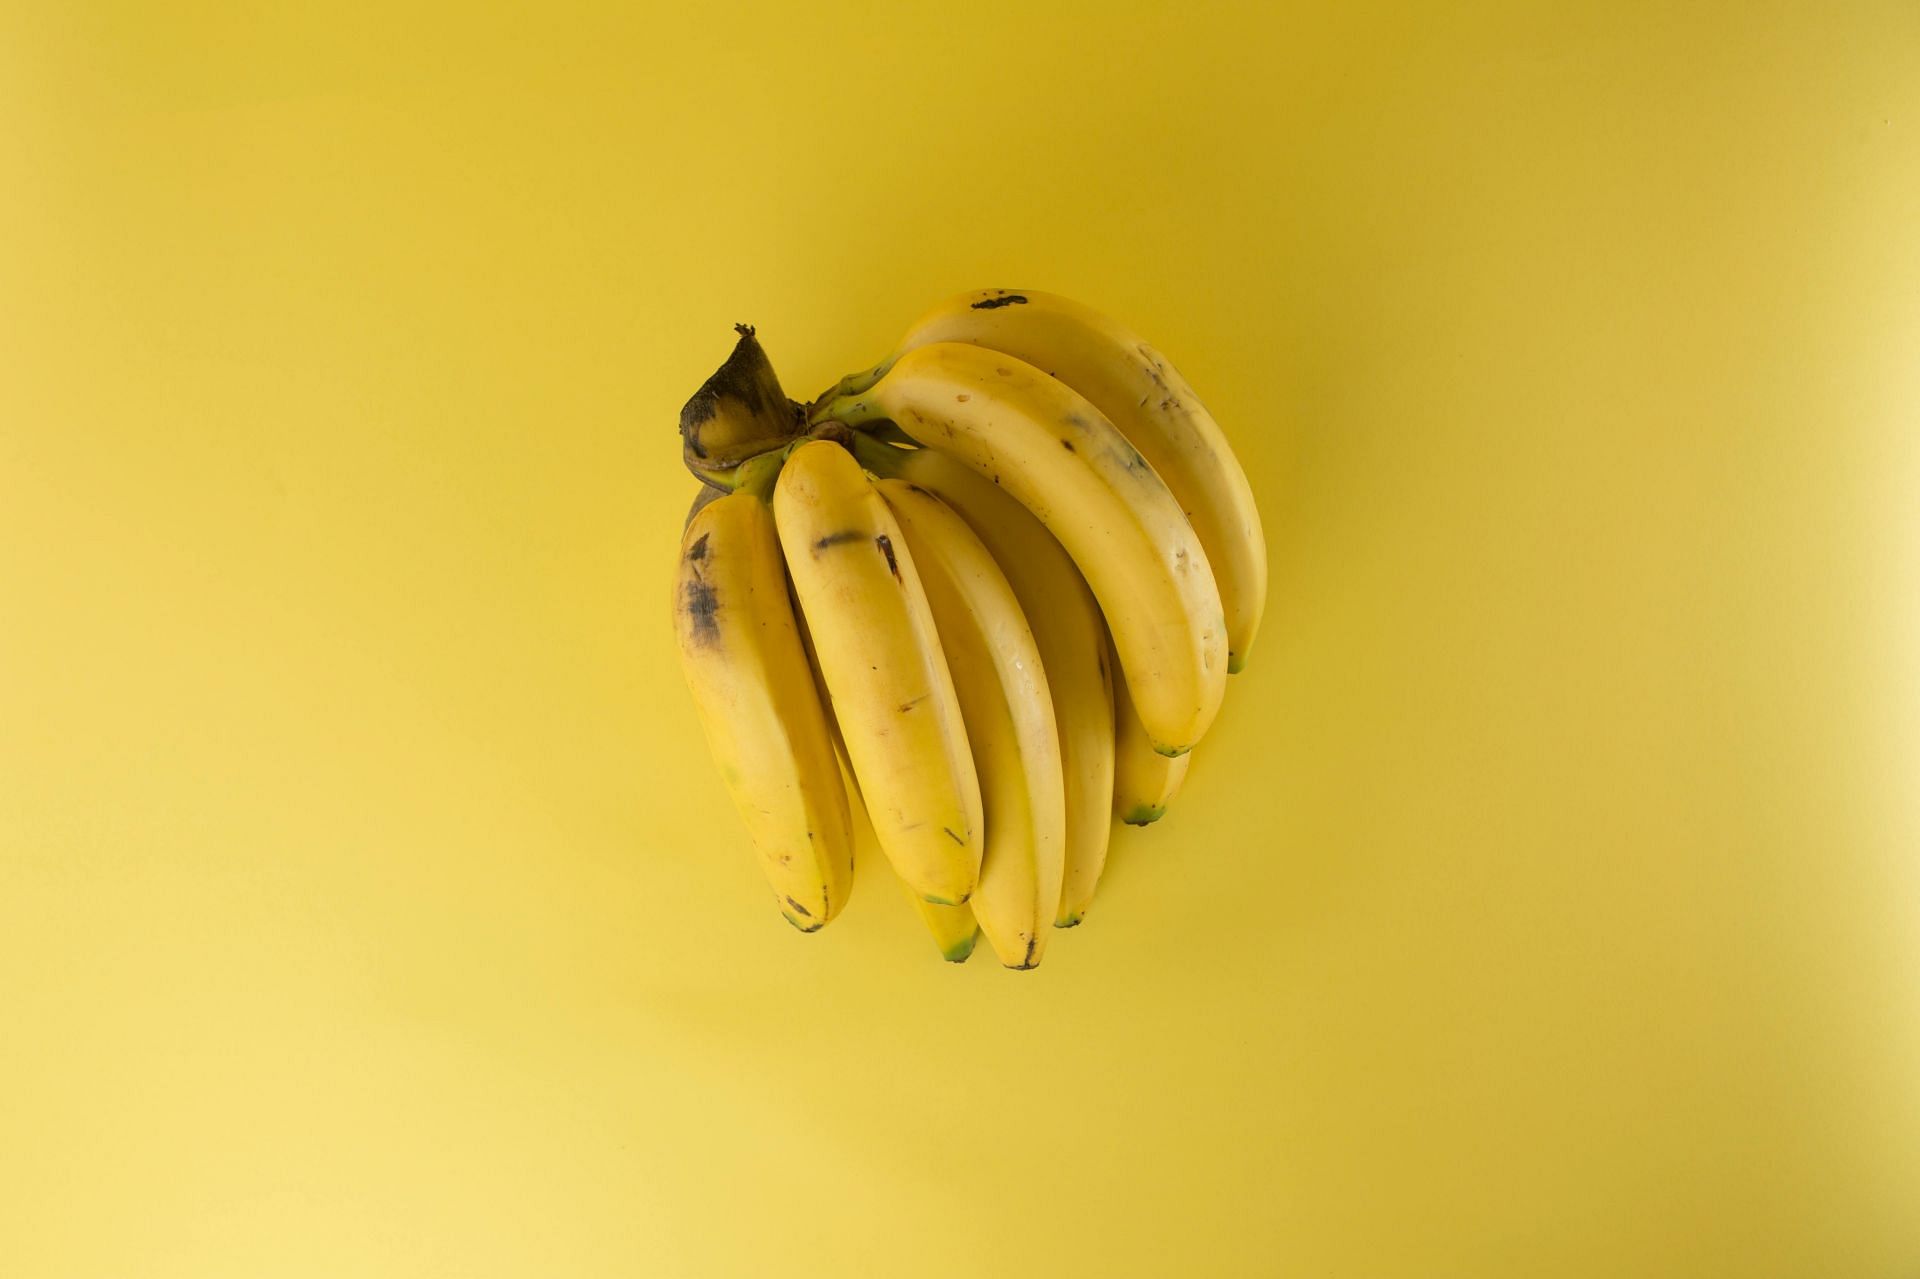 morning banana diet (image sourced via Pexels / Photo by juan)